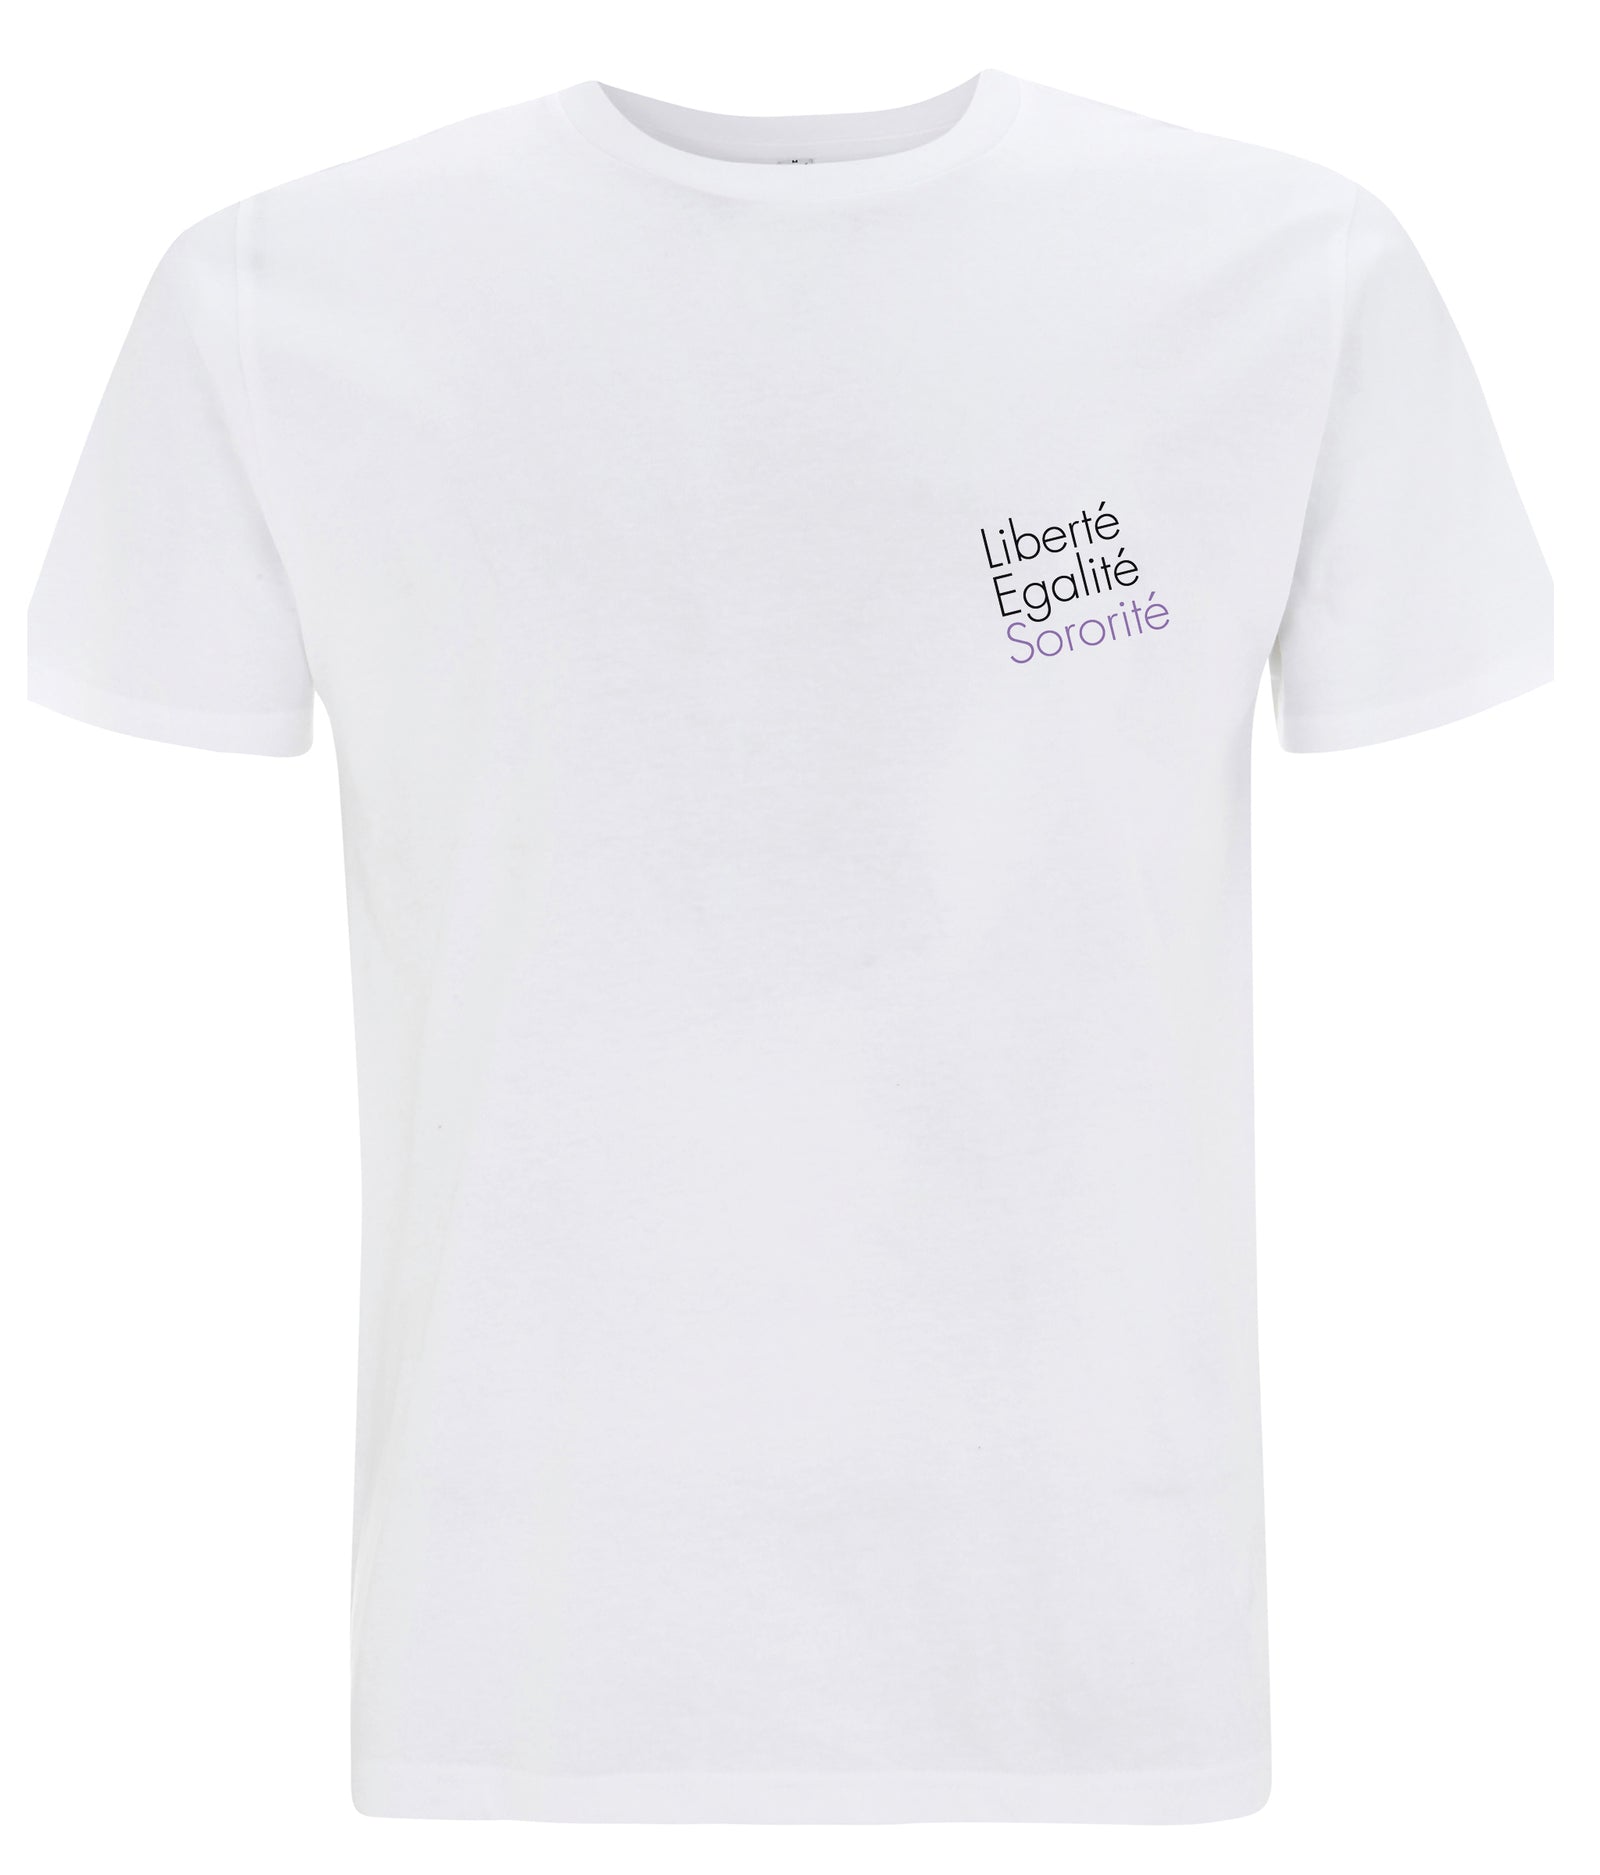 Liberte Egalite Chardonnay Essential T-Shirt for Sale by TrendingTees4u